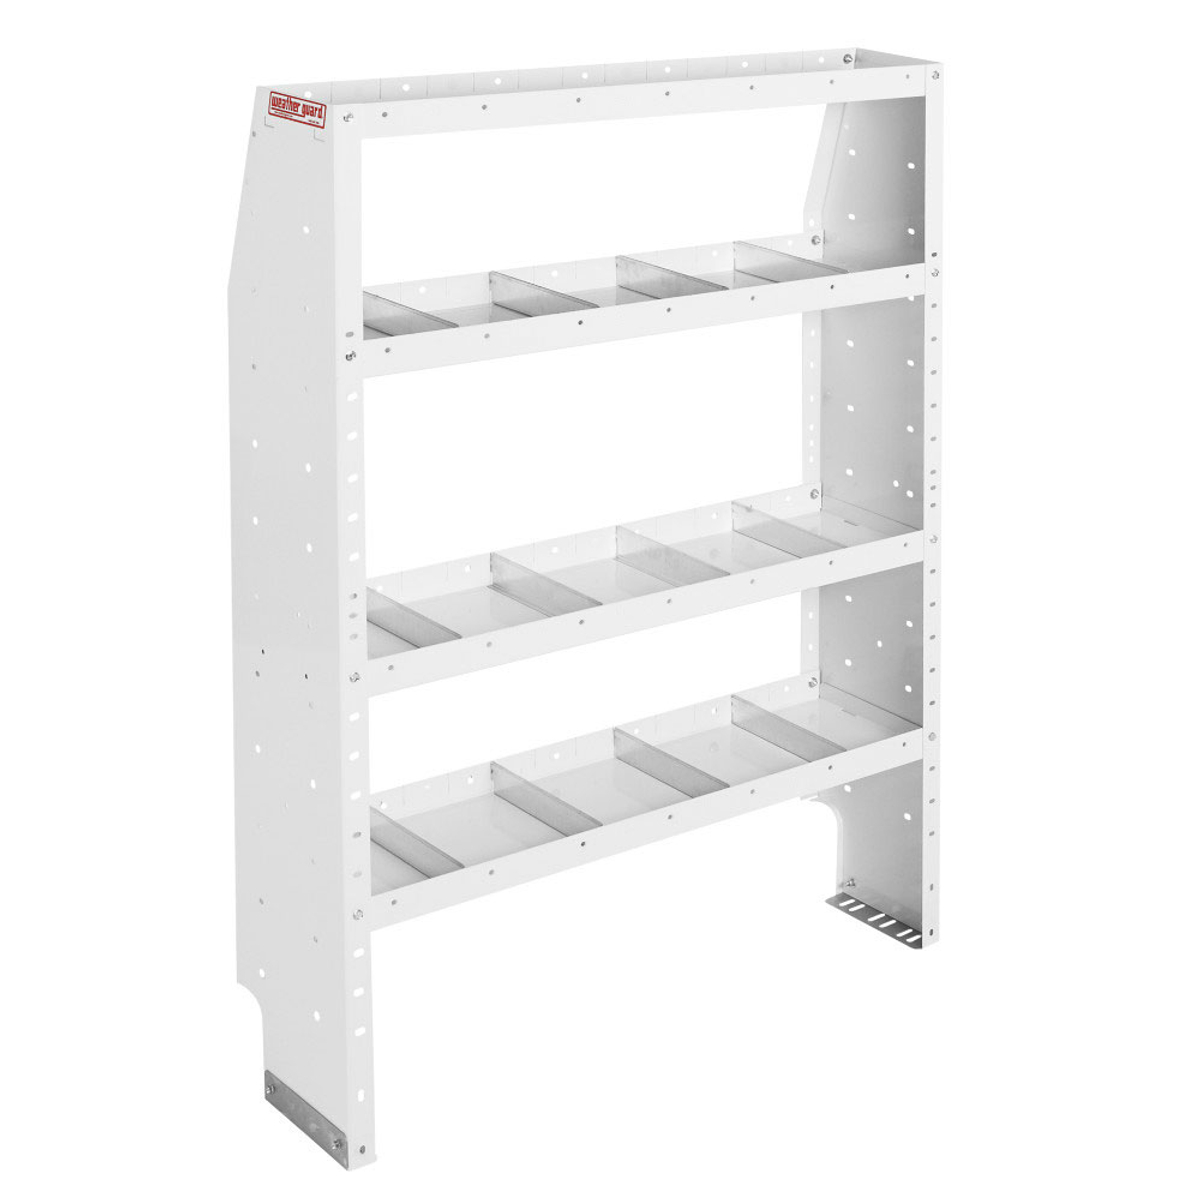 Adjustable 4 Shelf Unit - 60 in. x 42 in. x 13.5 in. Image